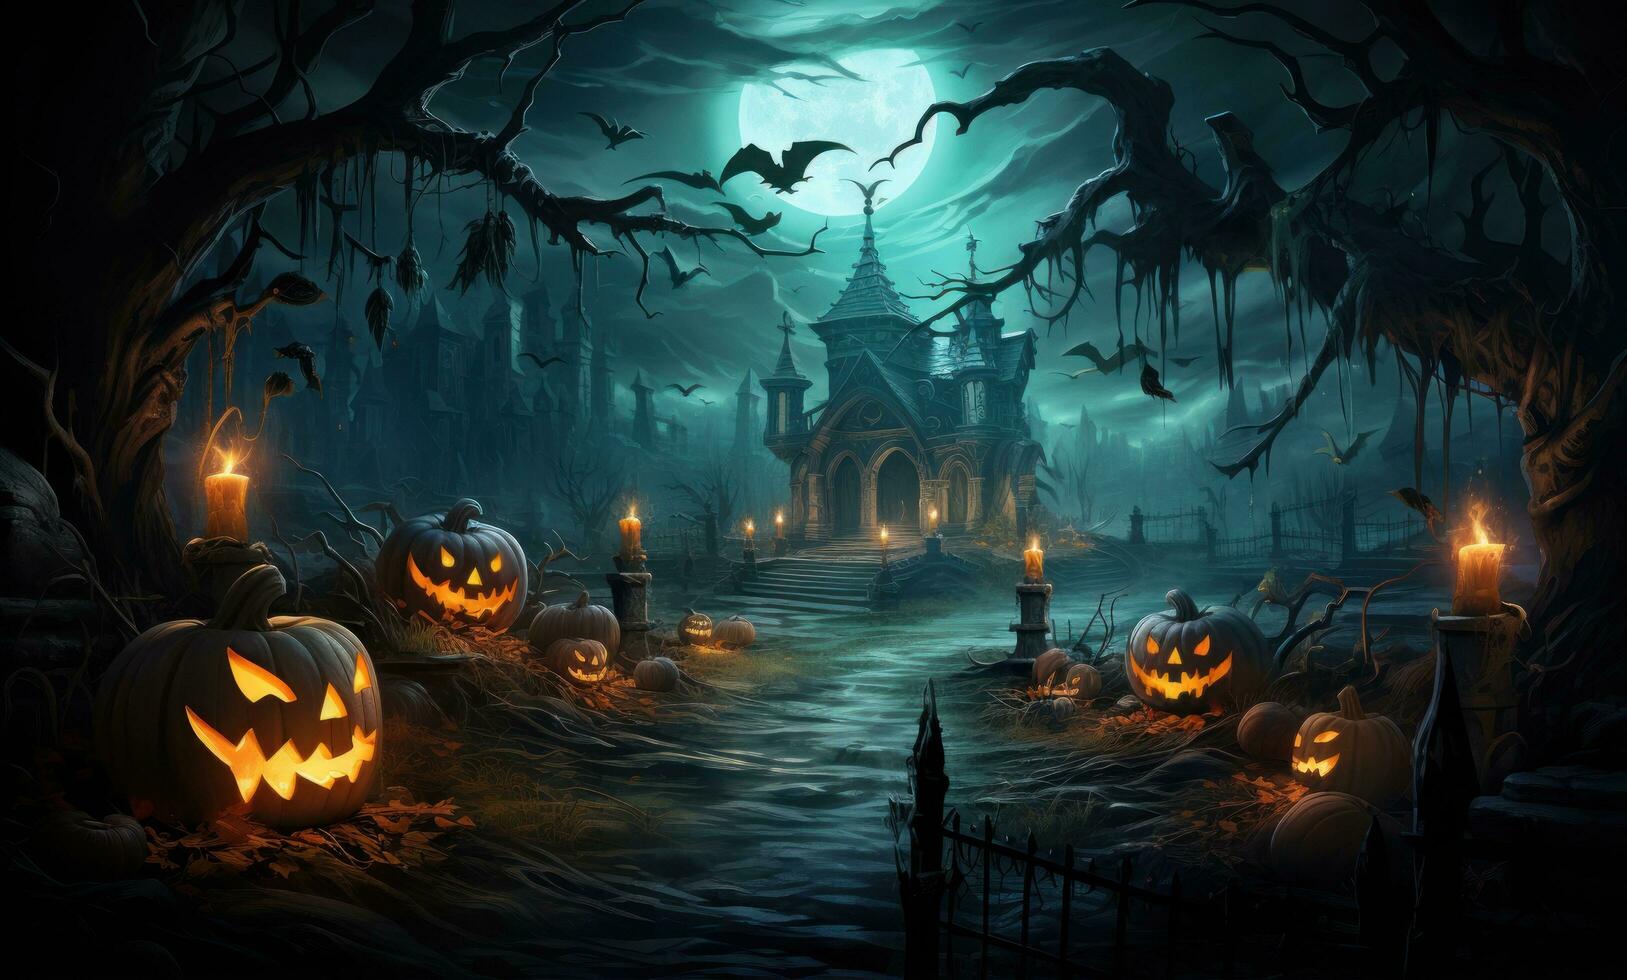 Spooky Halloween background 27685206 Stock Photo at Vecteezy